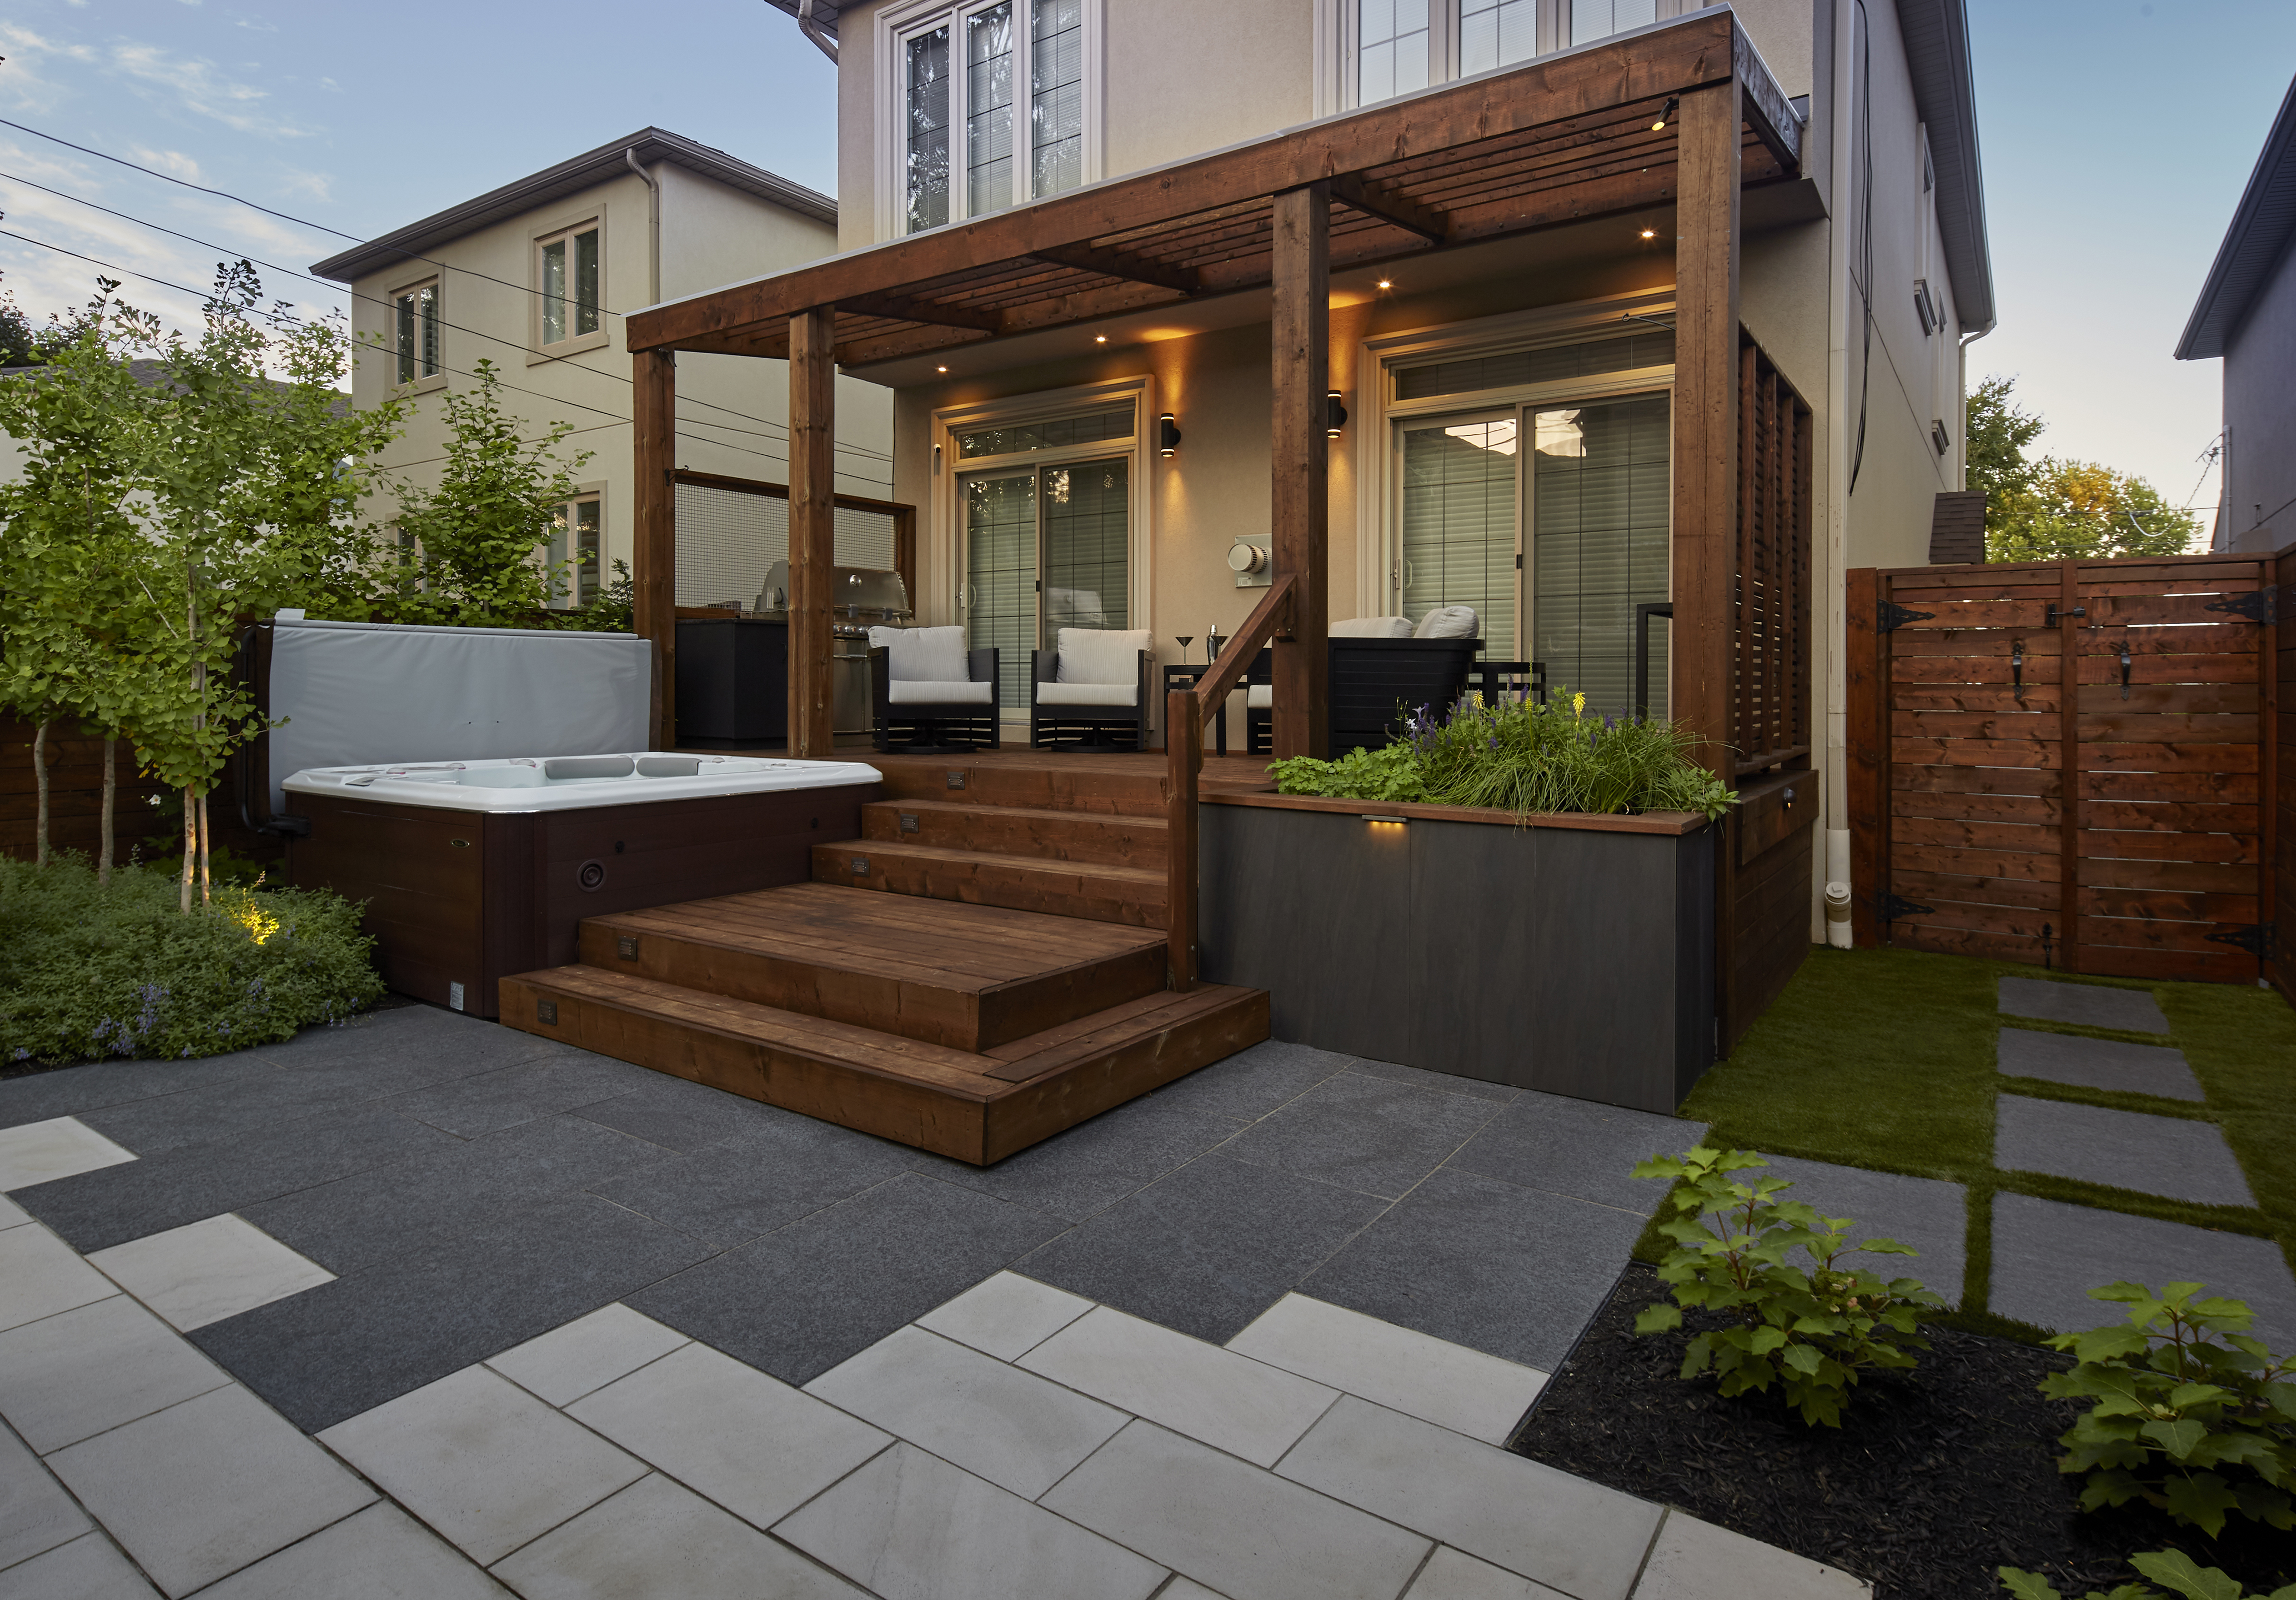 Residential garden for a modern urban house